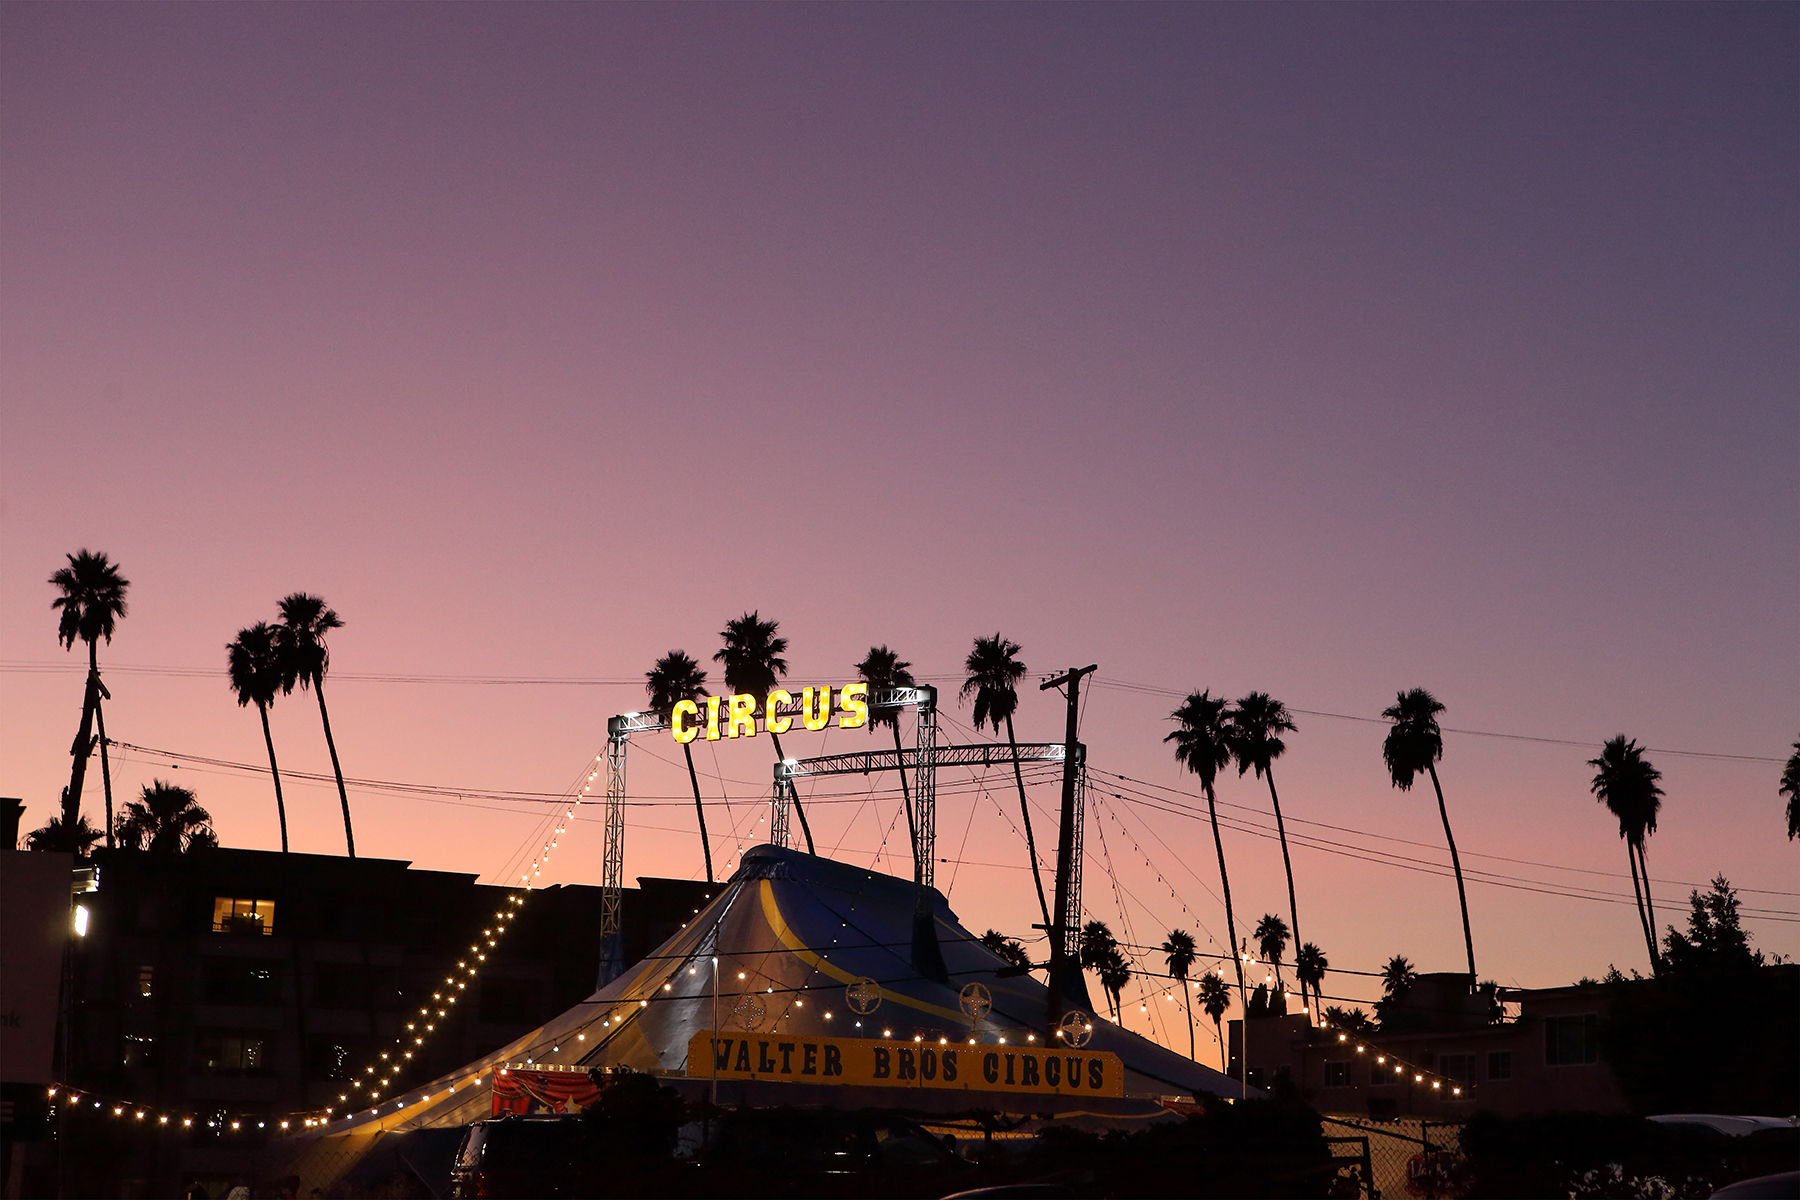 Los Angeles Circus photo mona awad